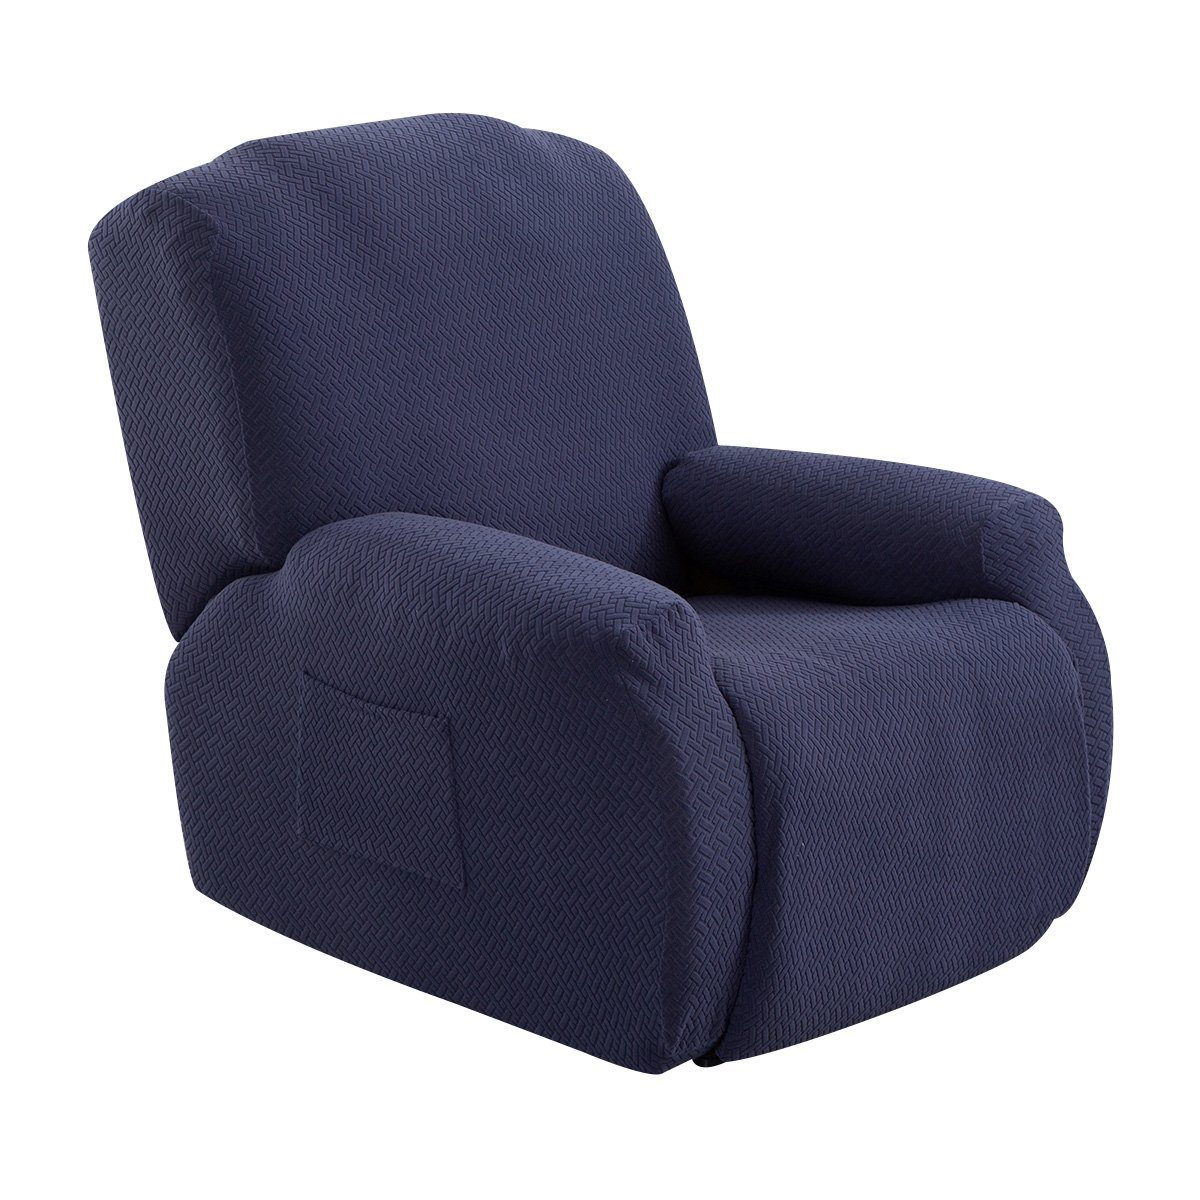 Rosnek, für Sesselhusse Sessel, Strukturoptik mit Komplett Stretchhusse, Blau Relaxsessel Sesselbezug Liege